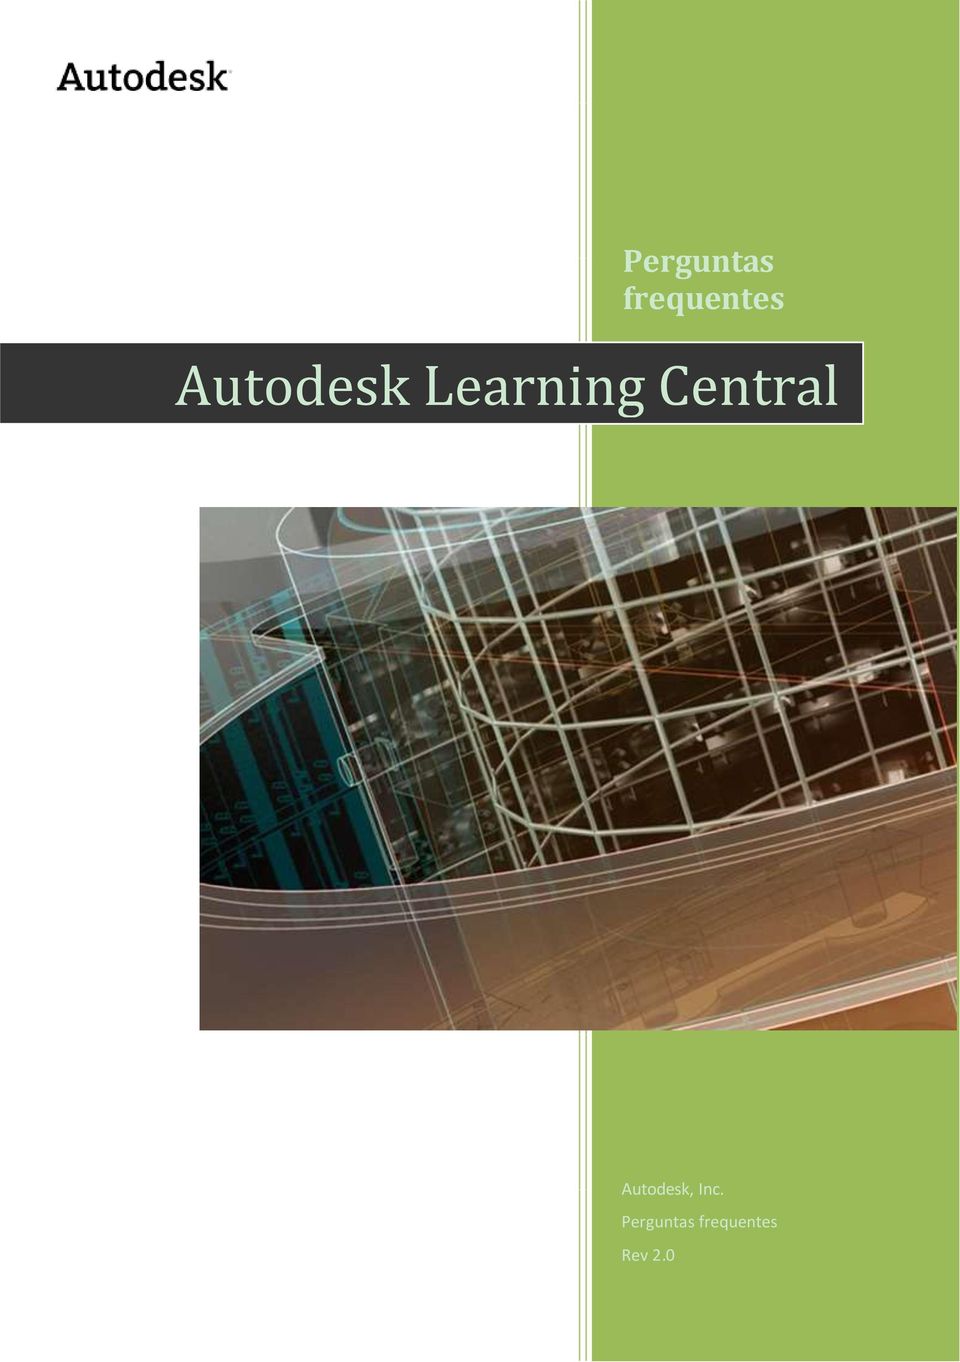 Central Autodesk, Inc.